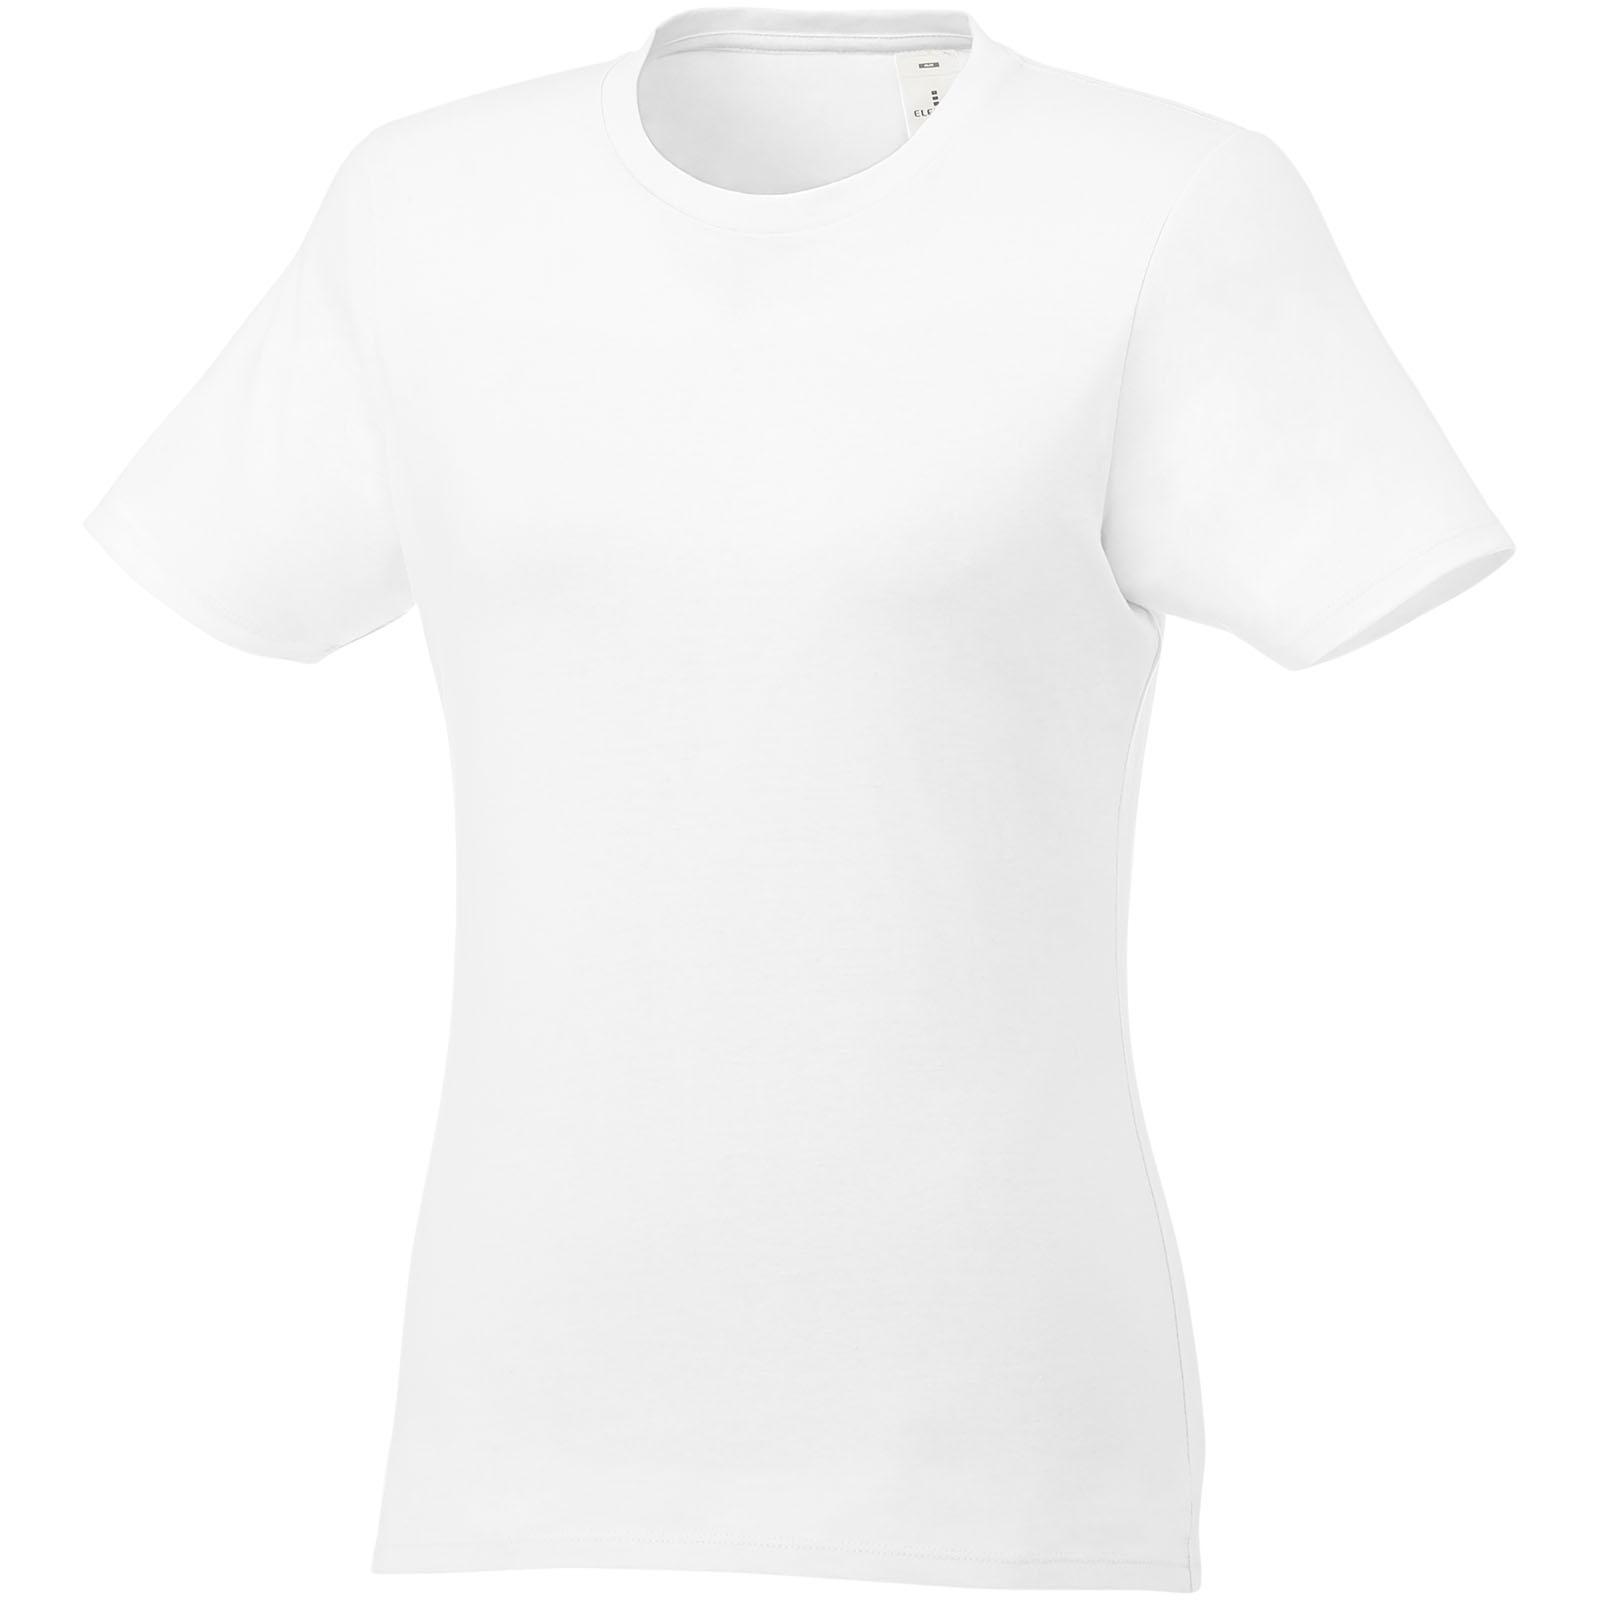 Advertising T-shirts - Heros short sleeve women's t-shirt - 0